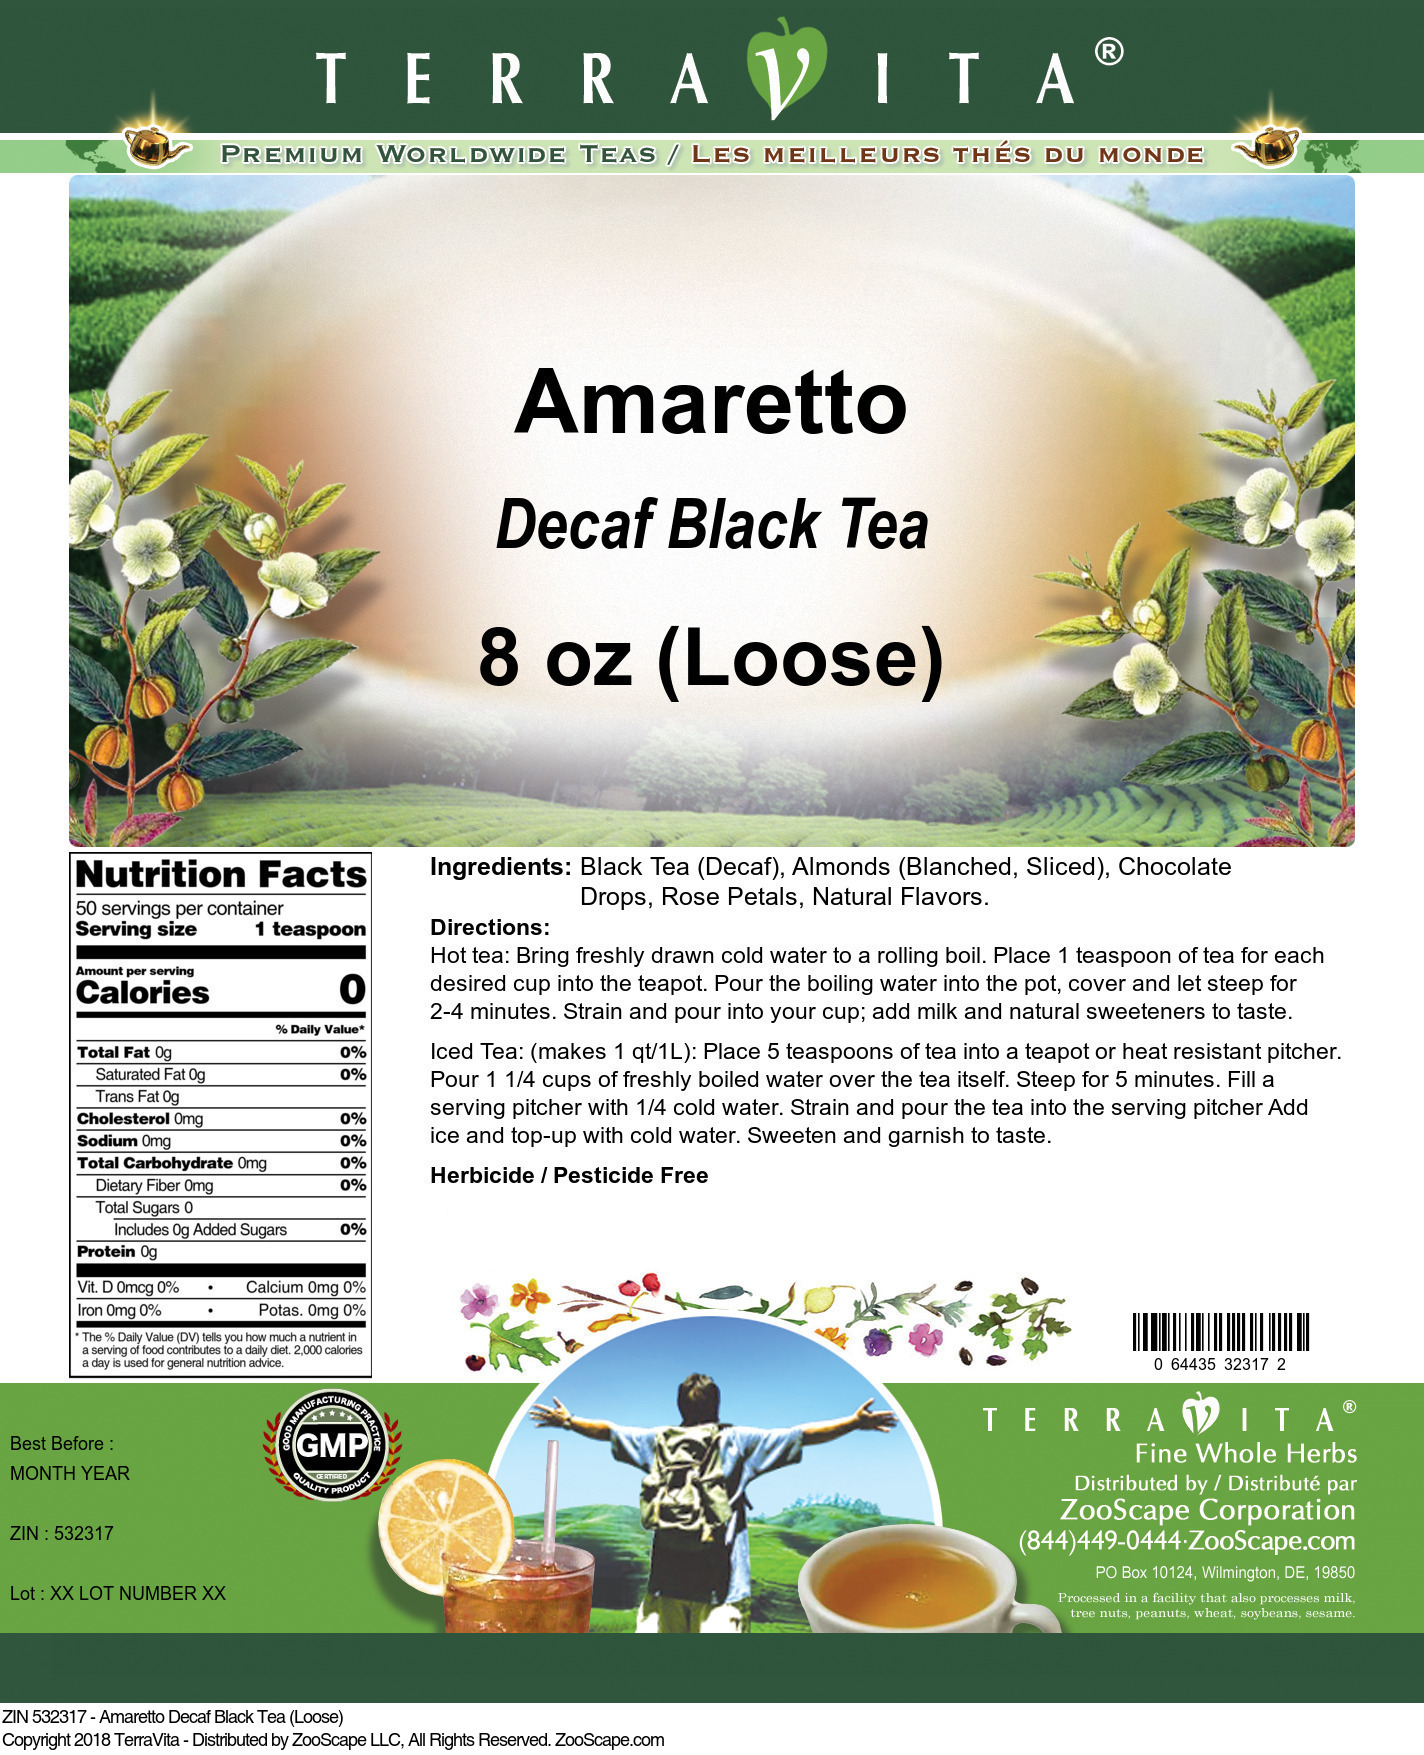 Amaretto Decaf Black Tea (Loose) - Label